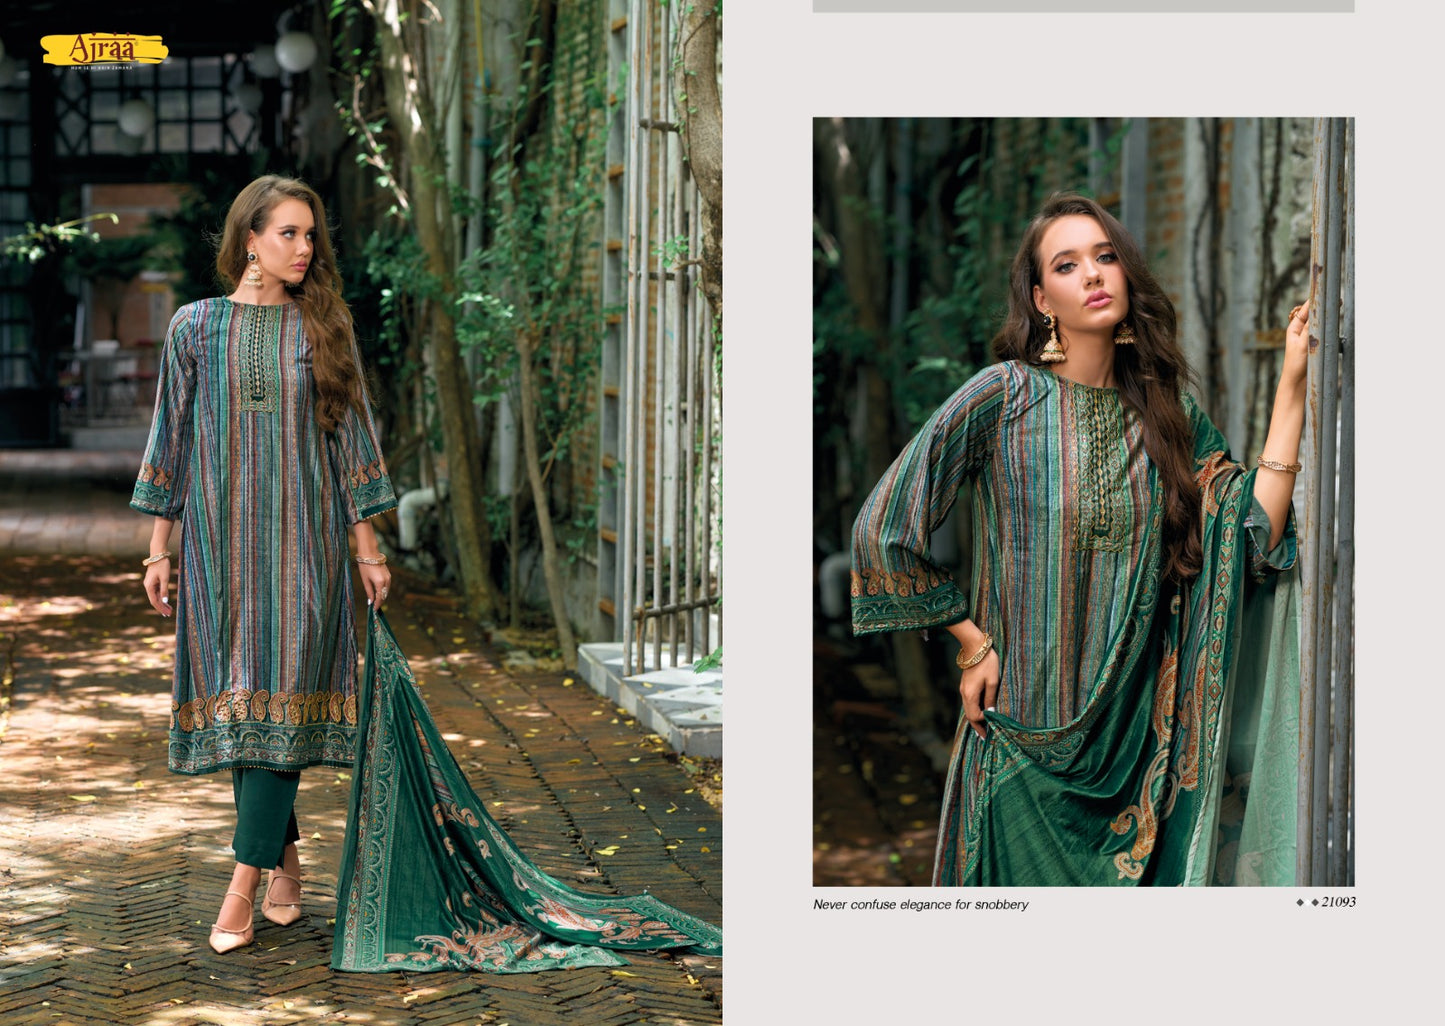 Zohra Ajraa Velvet Pashmina Suits